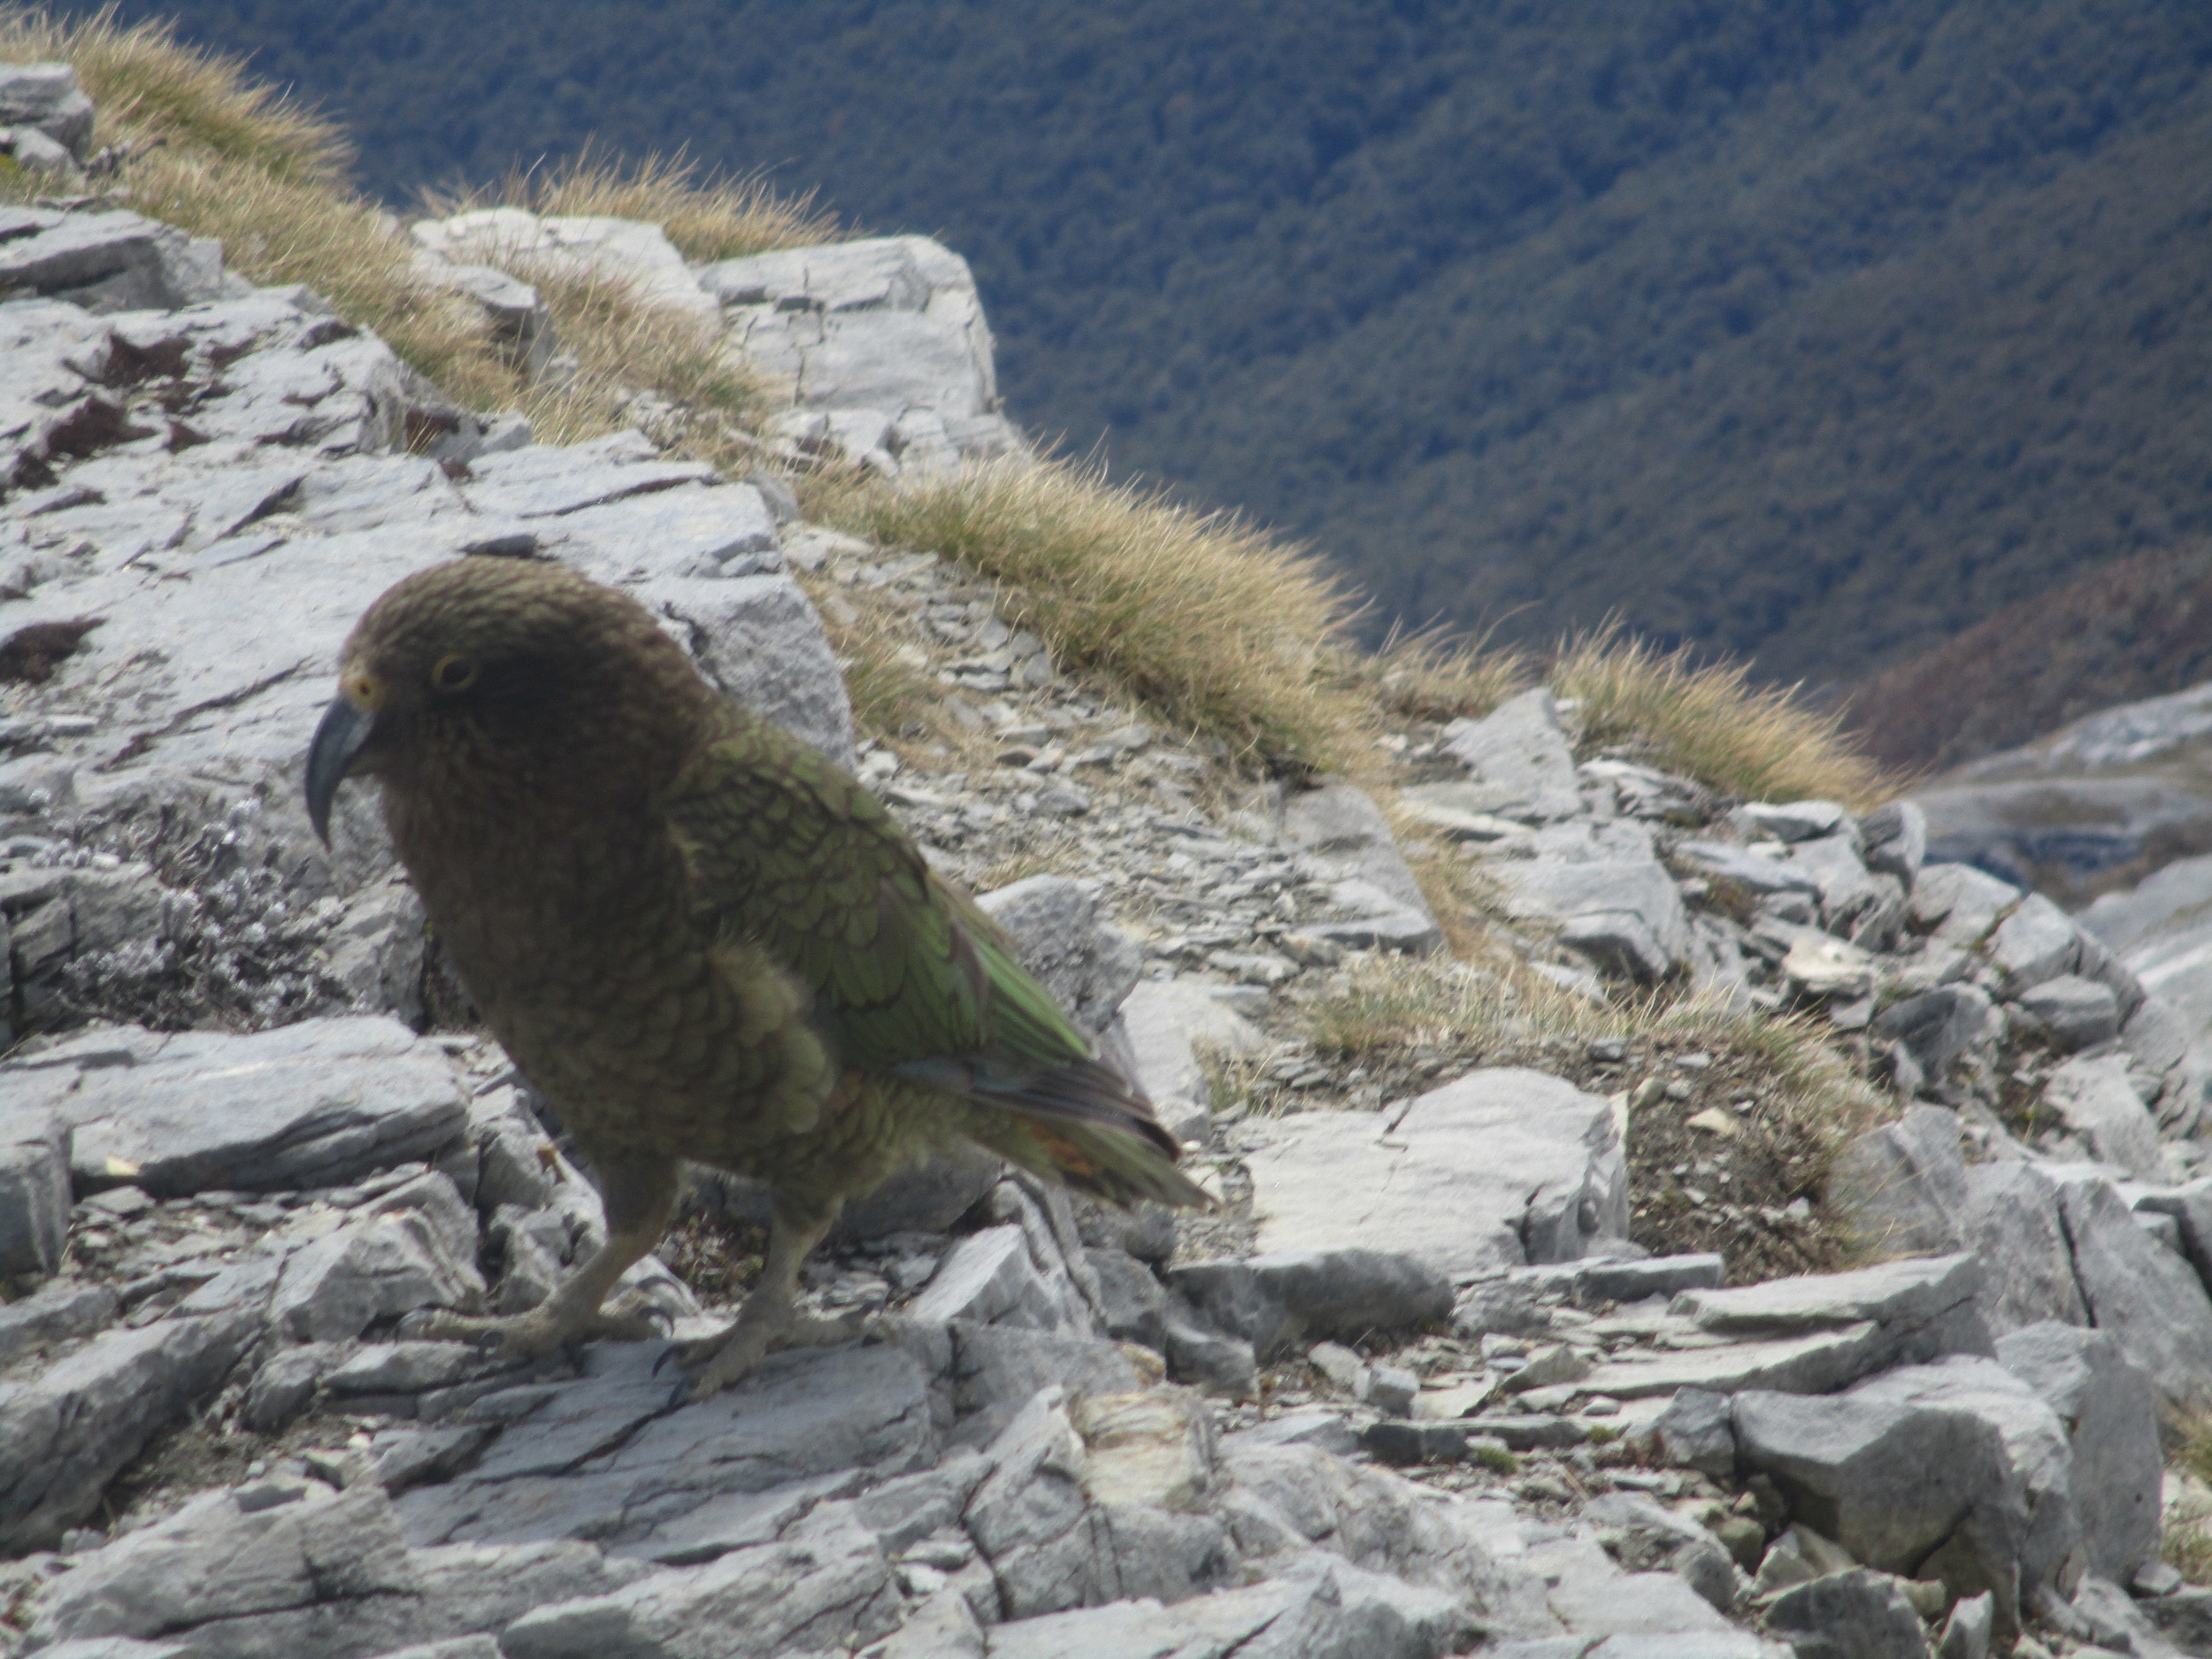   Mountain Parrot - Kea keeping us company  